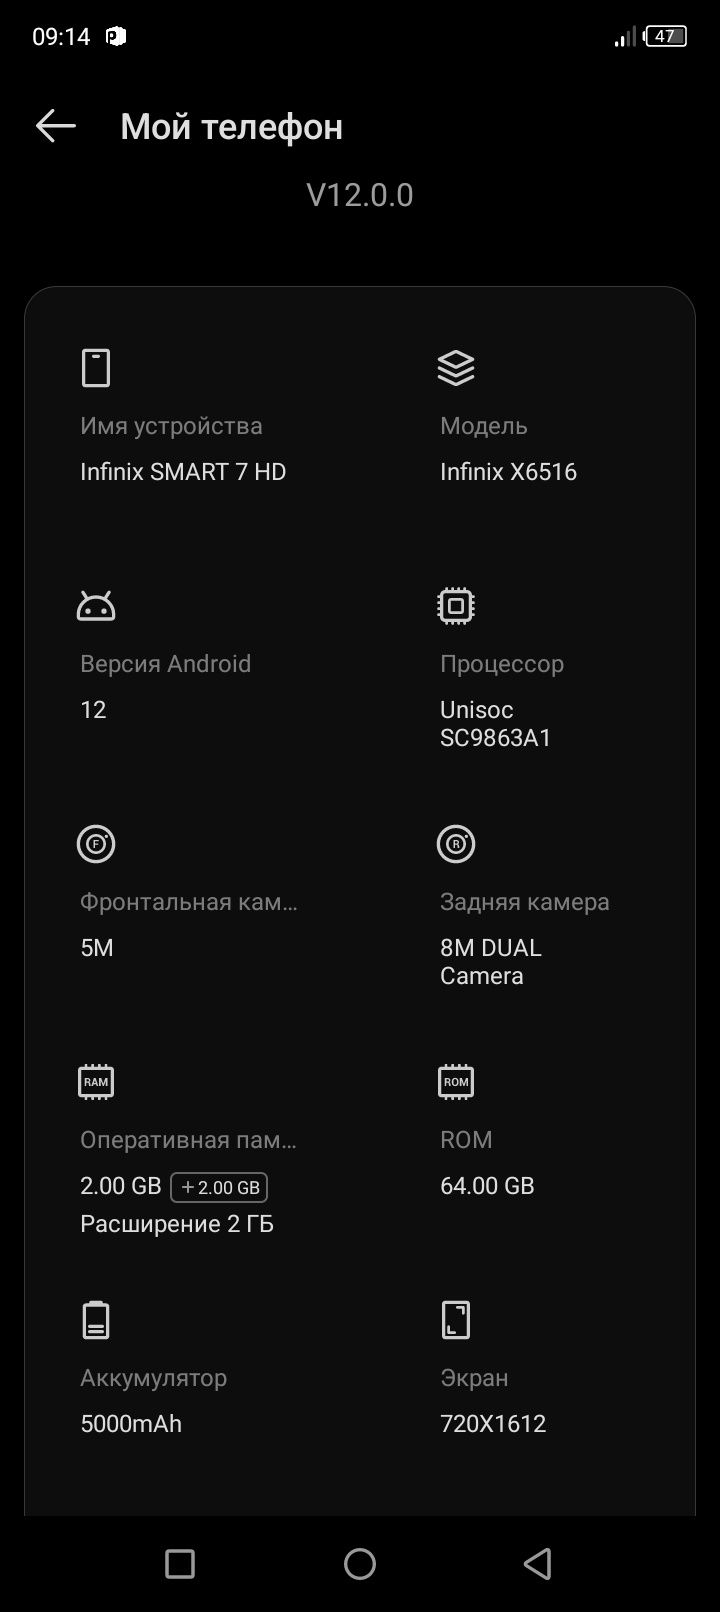 Infinix smart 7 hd